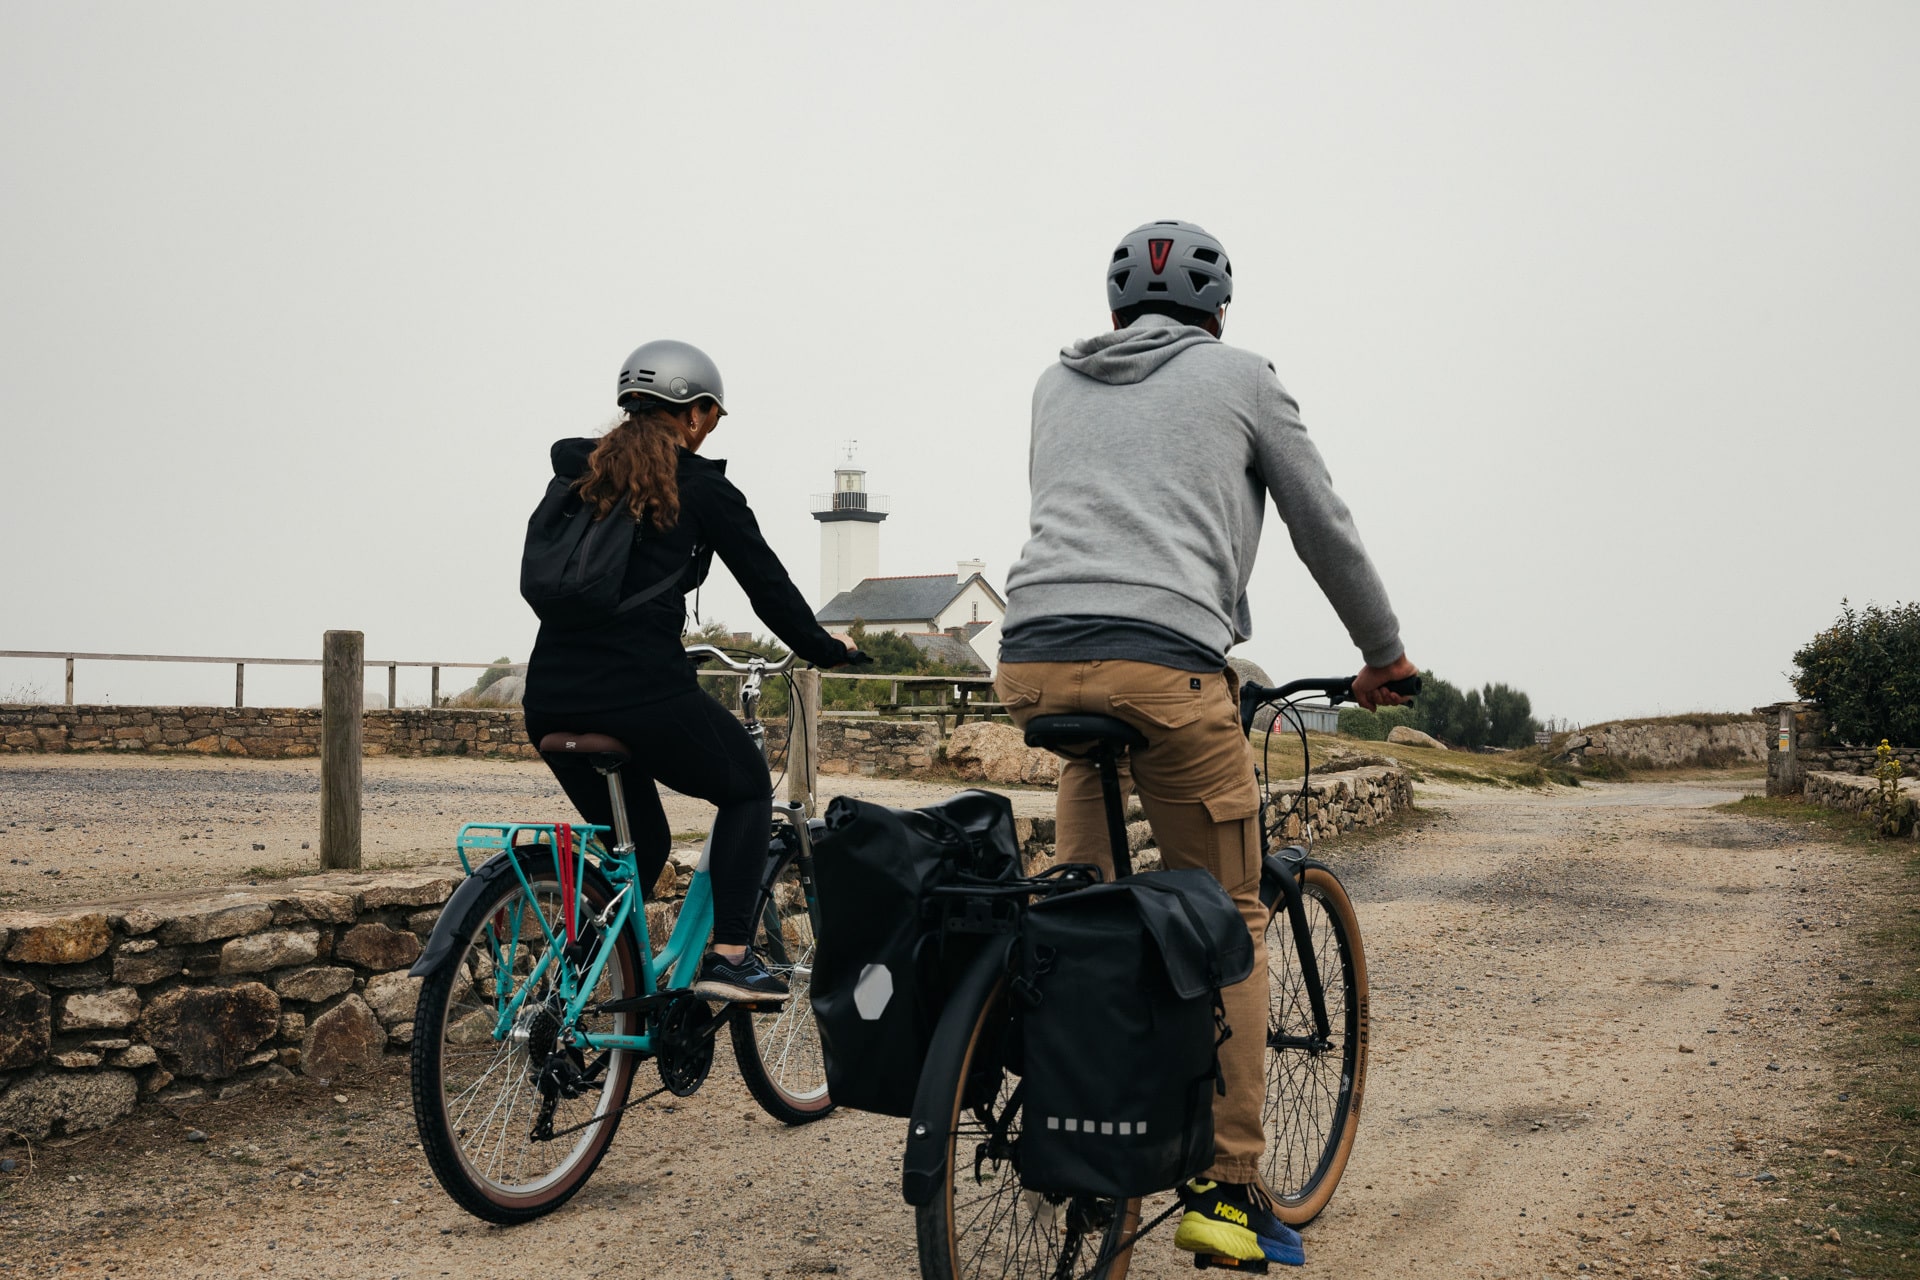 Cycling and mountain biking - Tourism Côte des Légendes